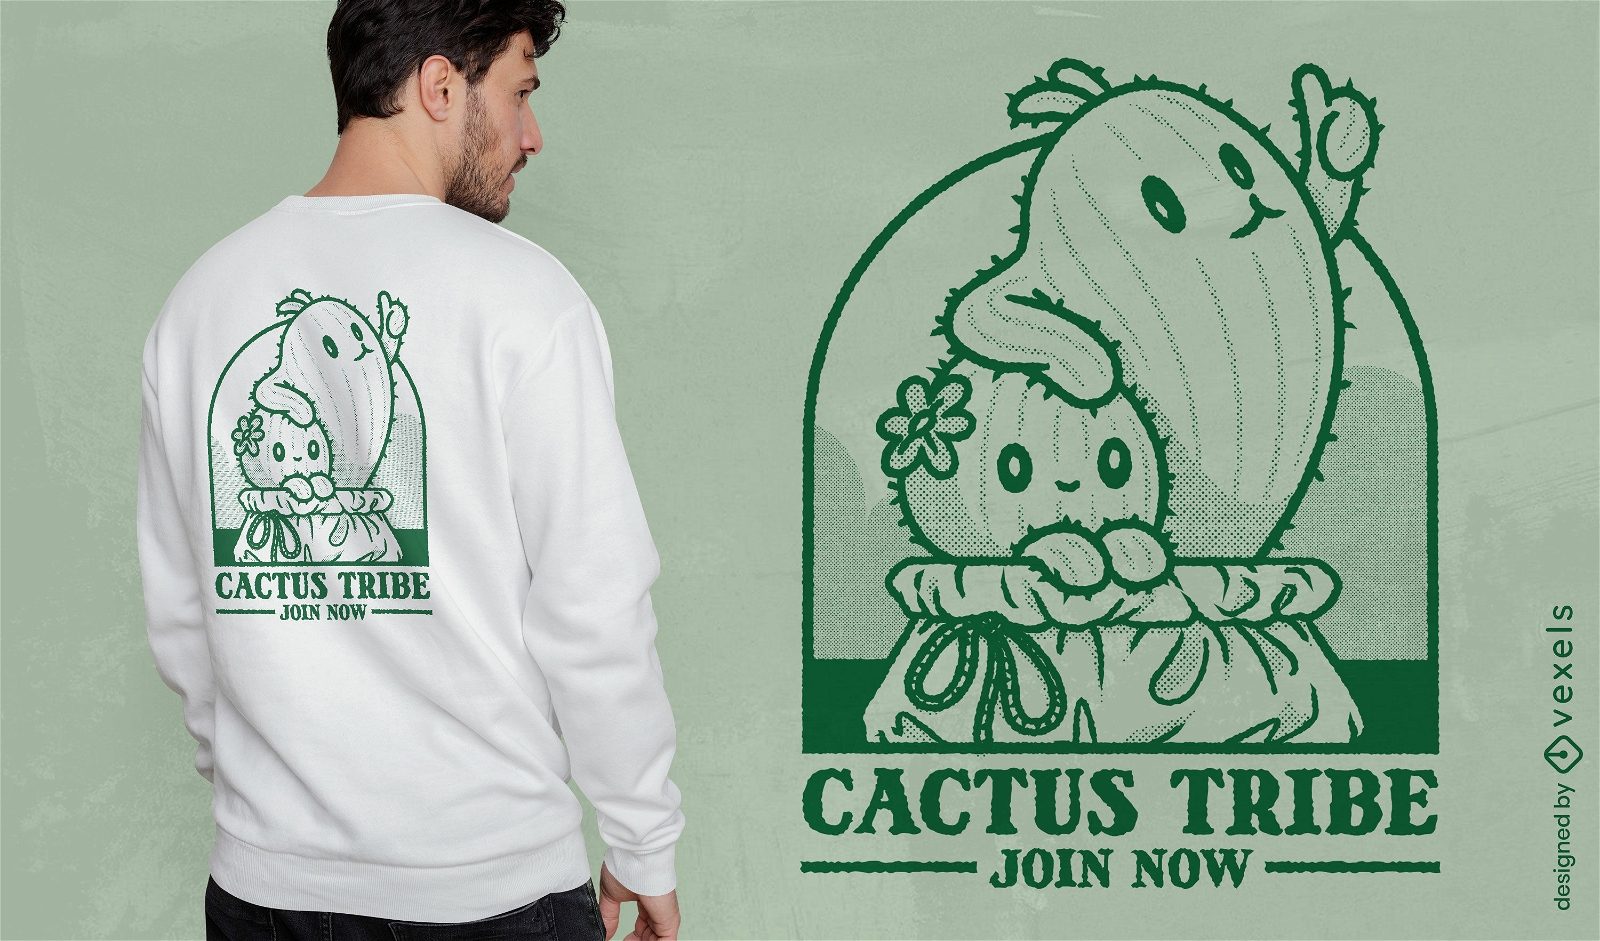 Cactus tribe membership t-shirt design